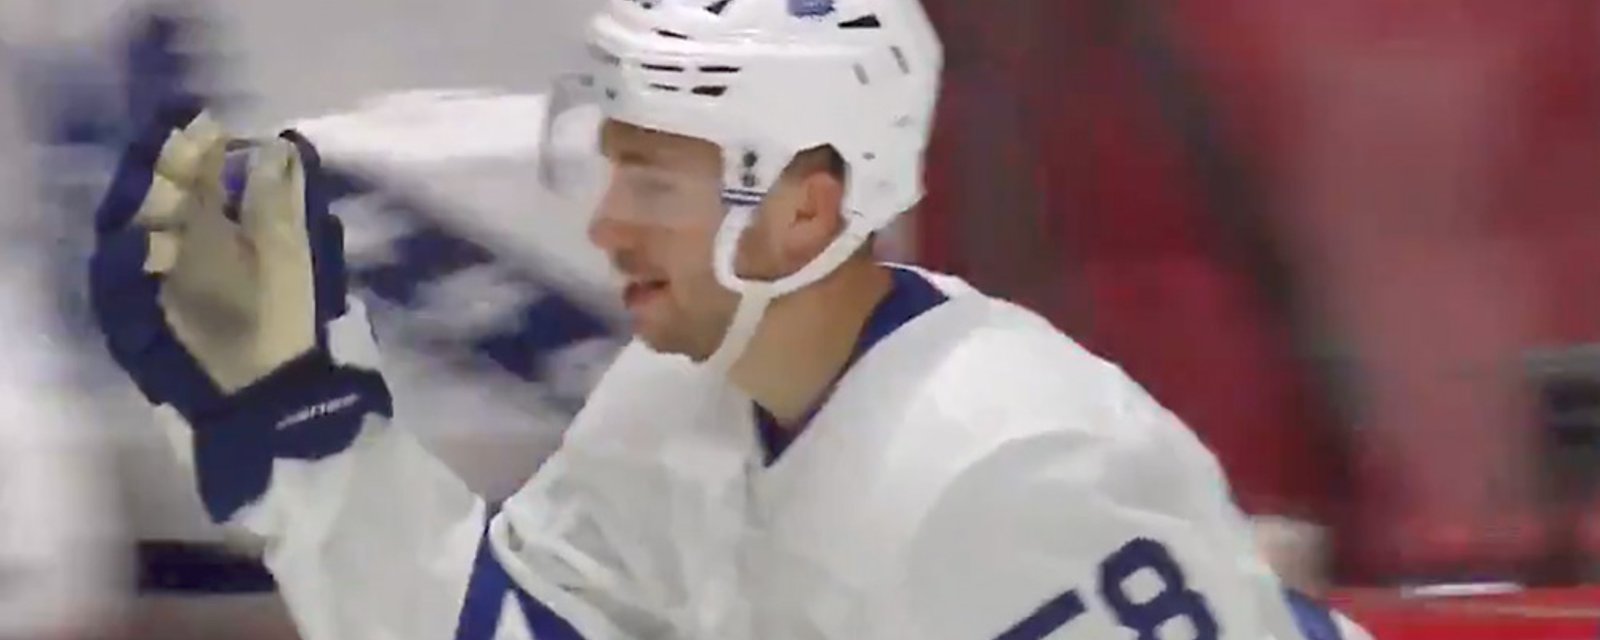 Maple Leafs forward Michael Bunting on fire vs. Senators (VIDEO)